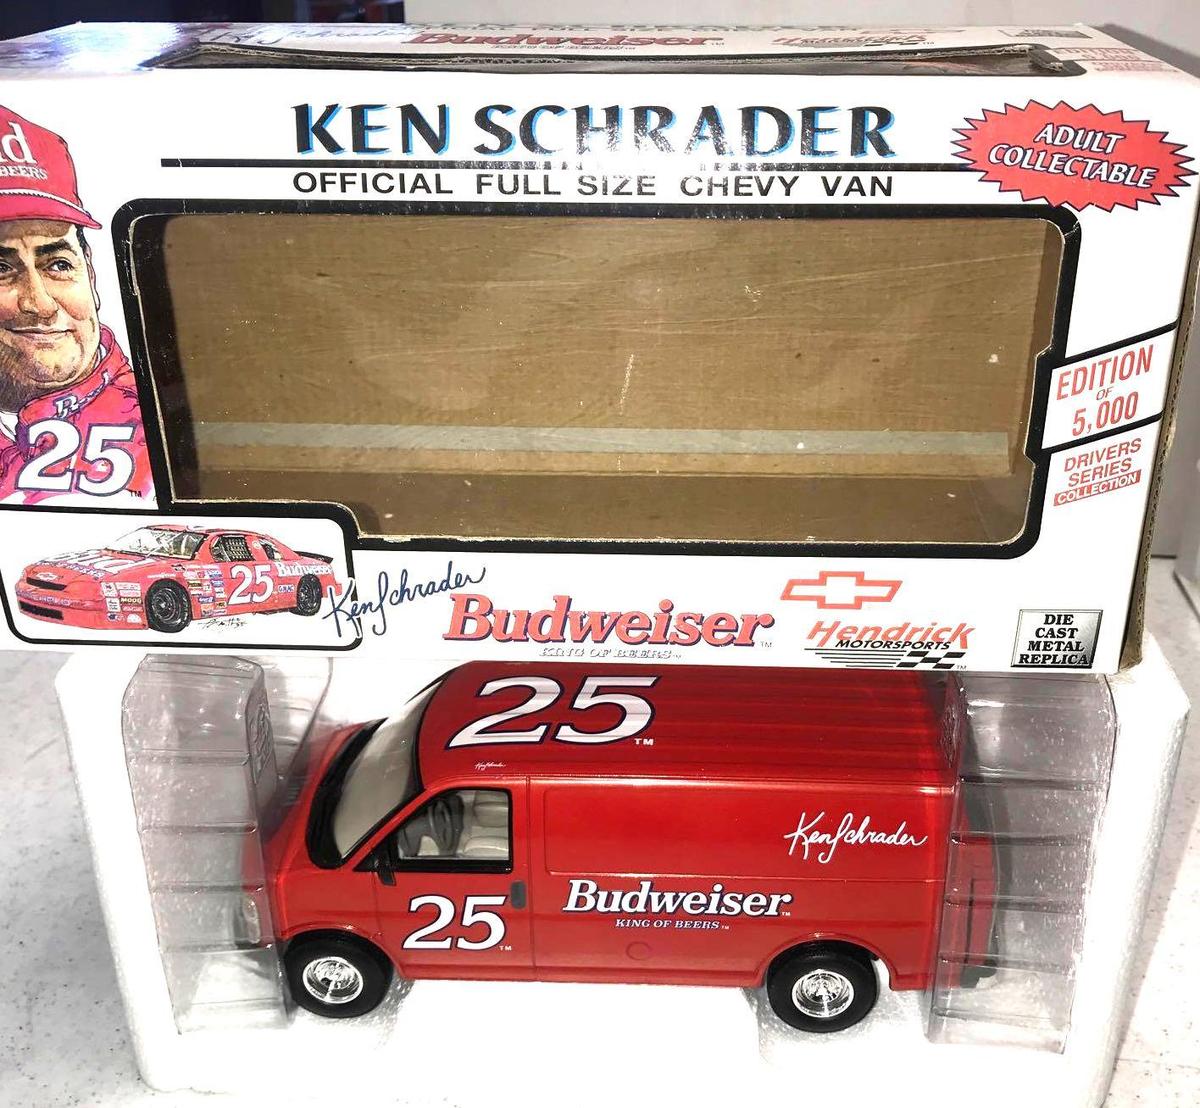 Hendrick Ken Schrader official size Chevy van 25 limited edition